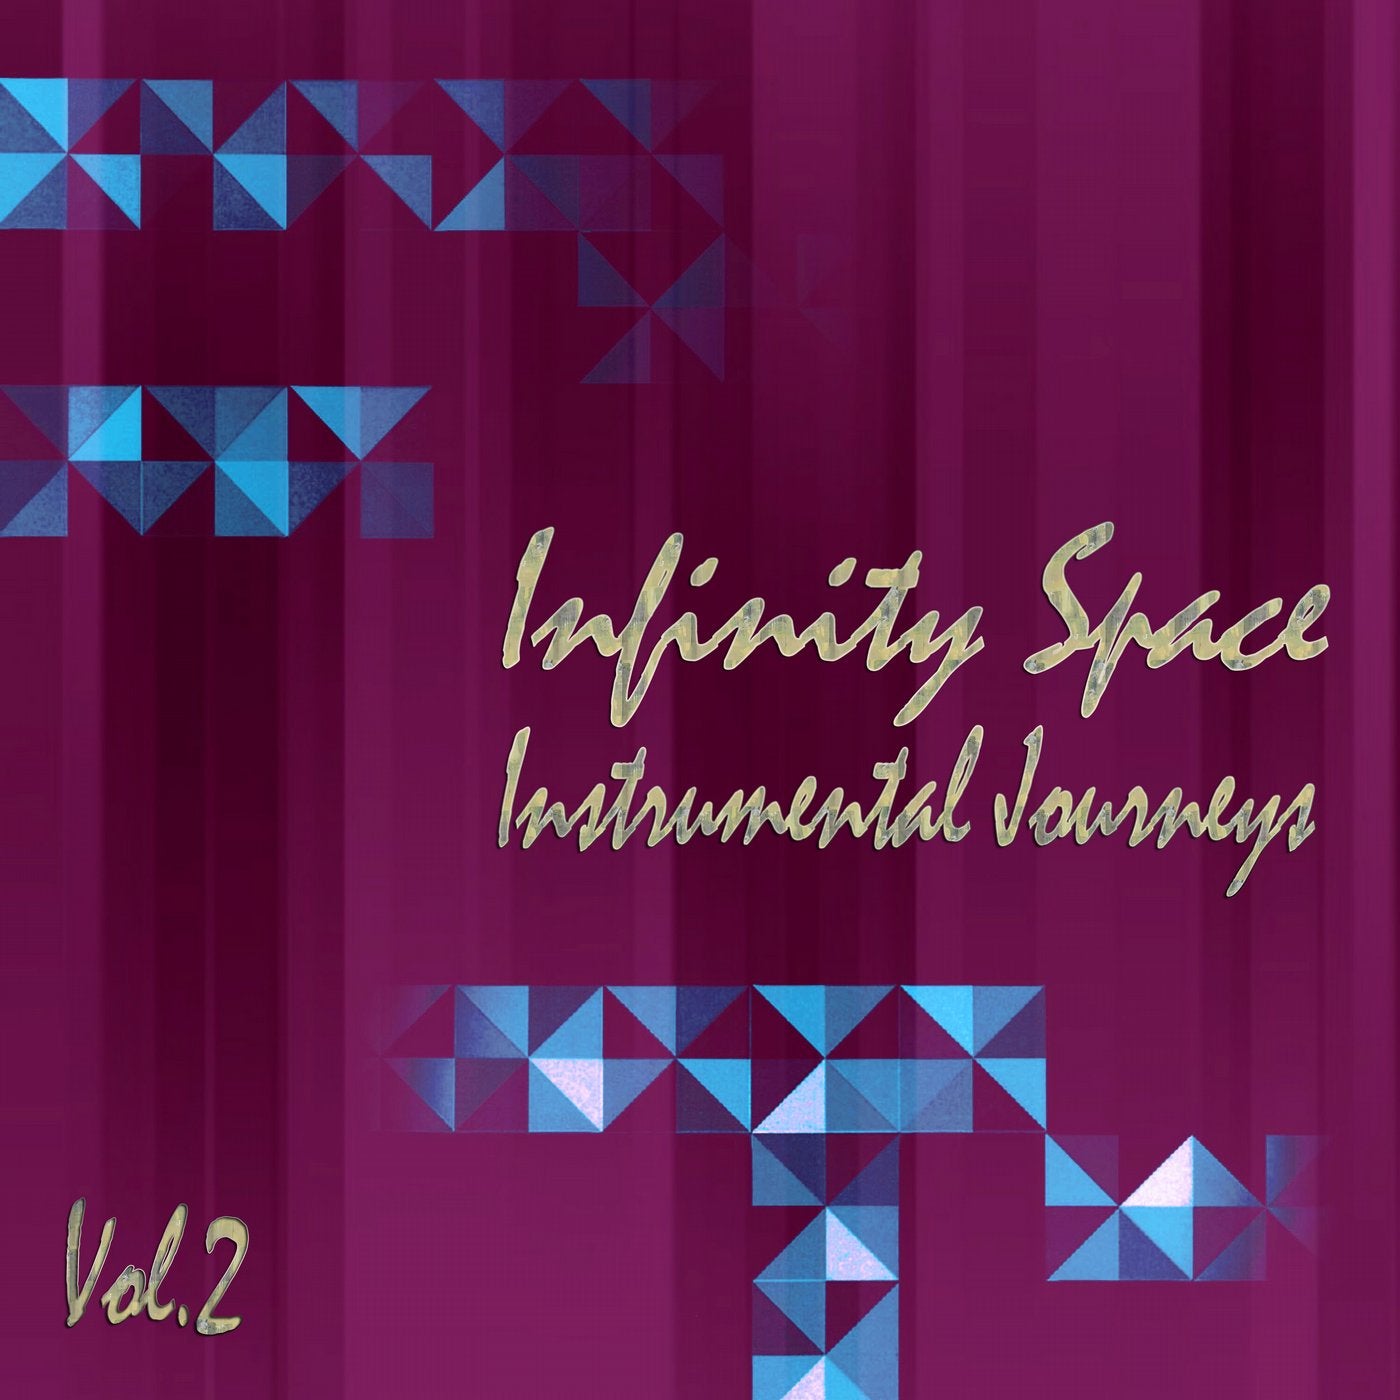 Instrumental Journeys, Vol. 2